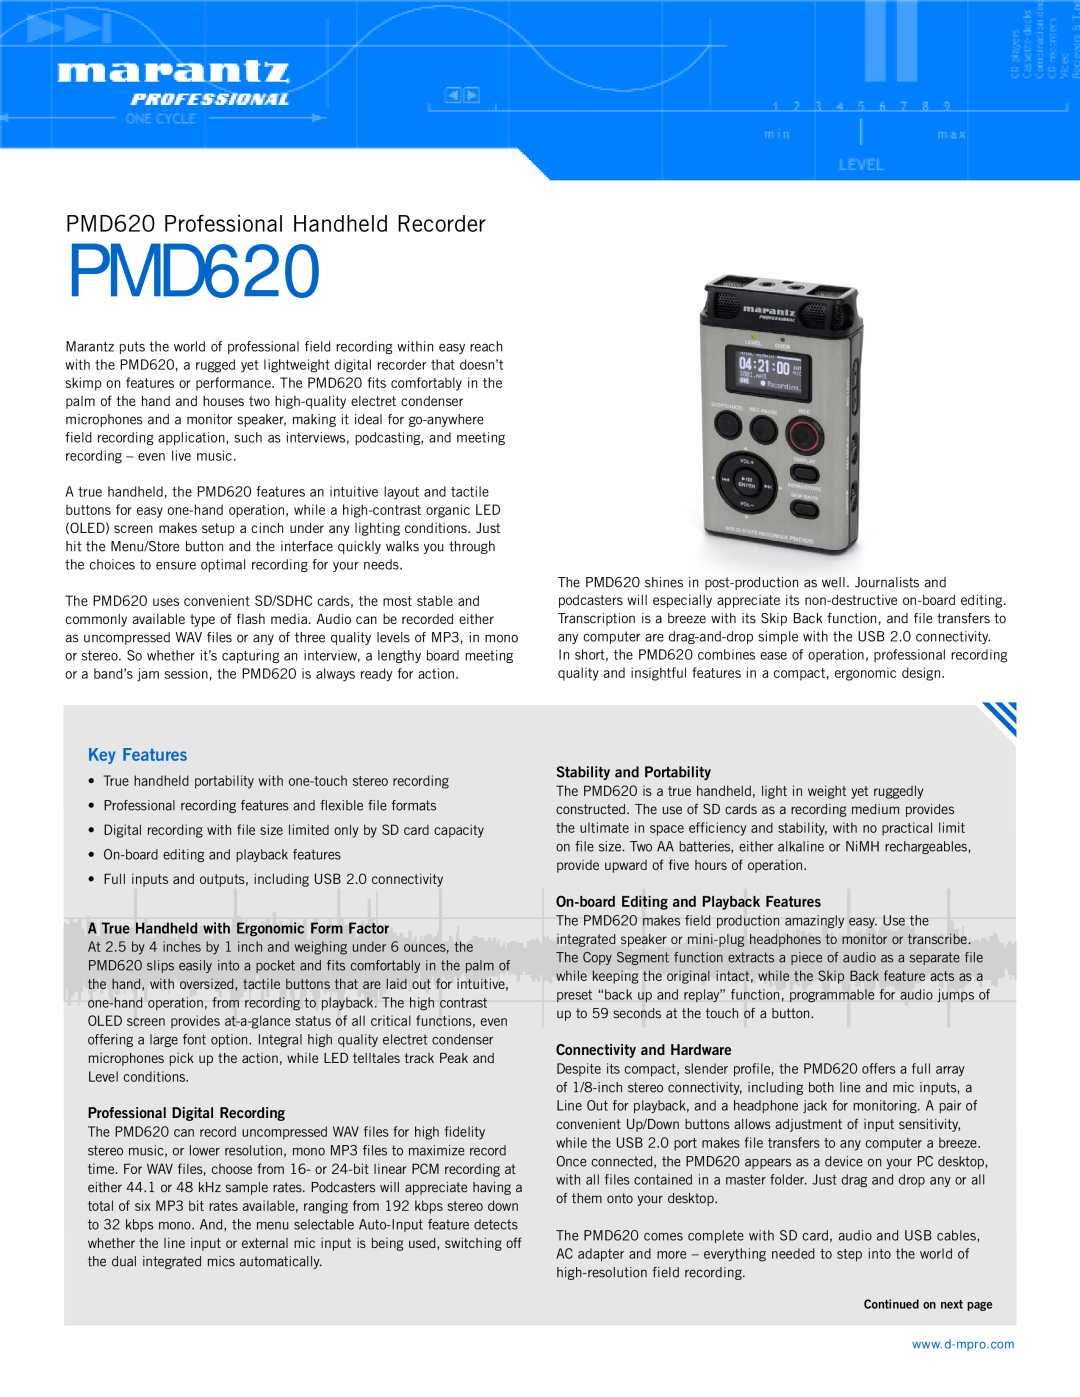 Marantz PMD620 manual A True Handheld with Ergonomic Form Factor, Professional Digital Recording, Key Features 